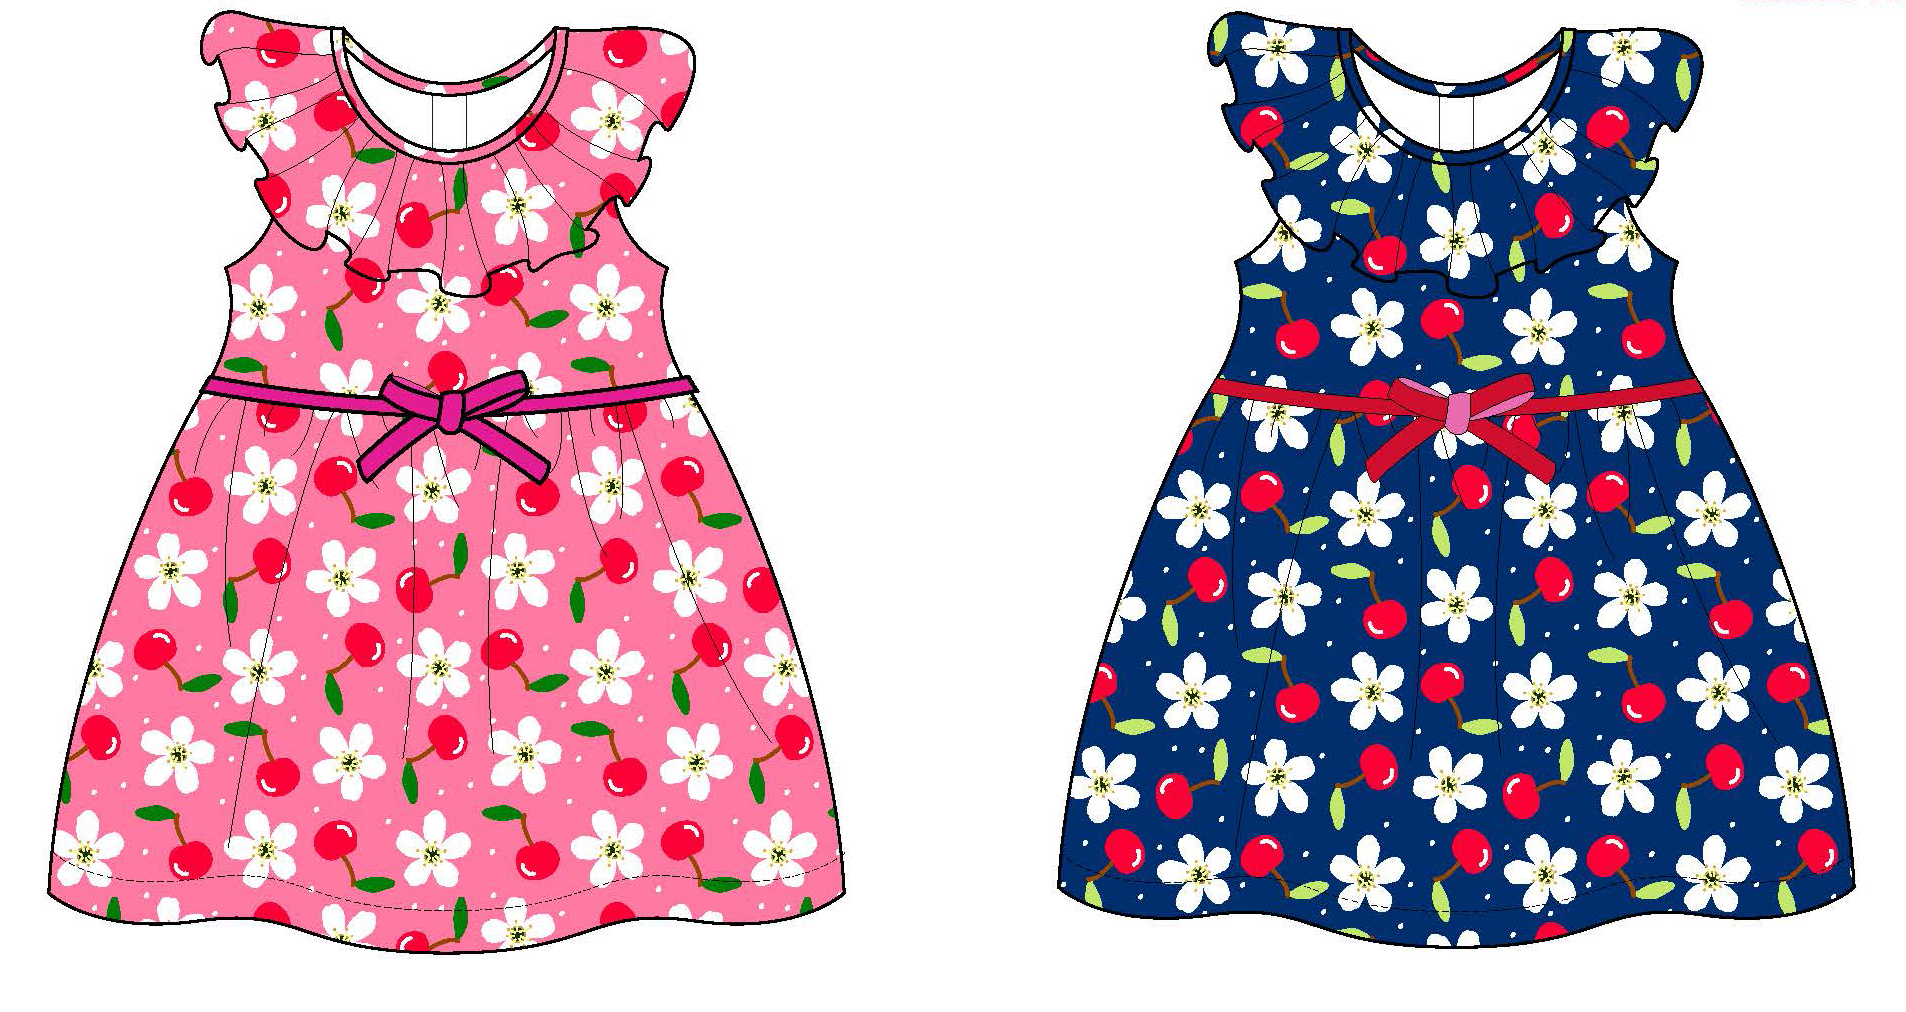 Toddler Girl's Knit DRESS w/ Ruffle Top & Ribbon Bow Embellishment - Cherry & Floral Garden Print - 